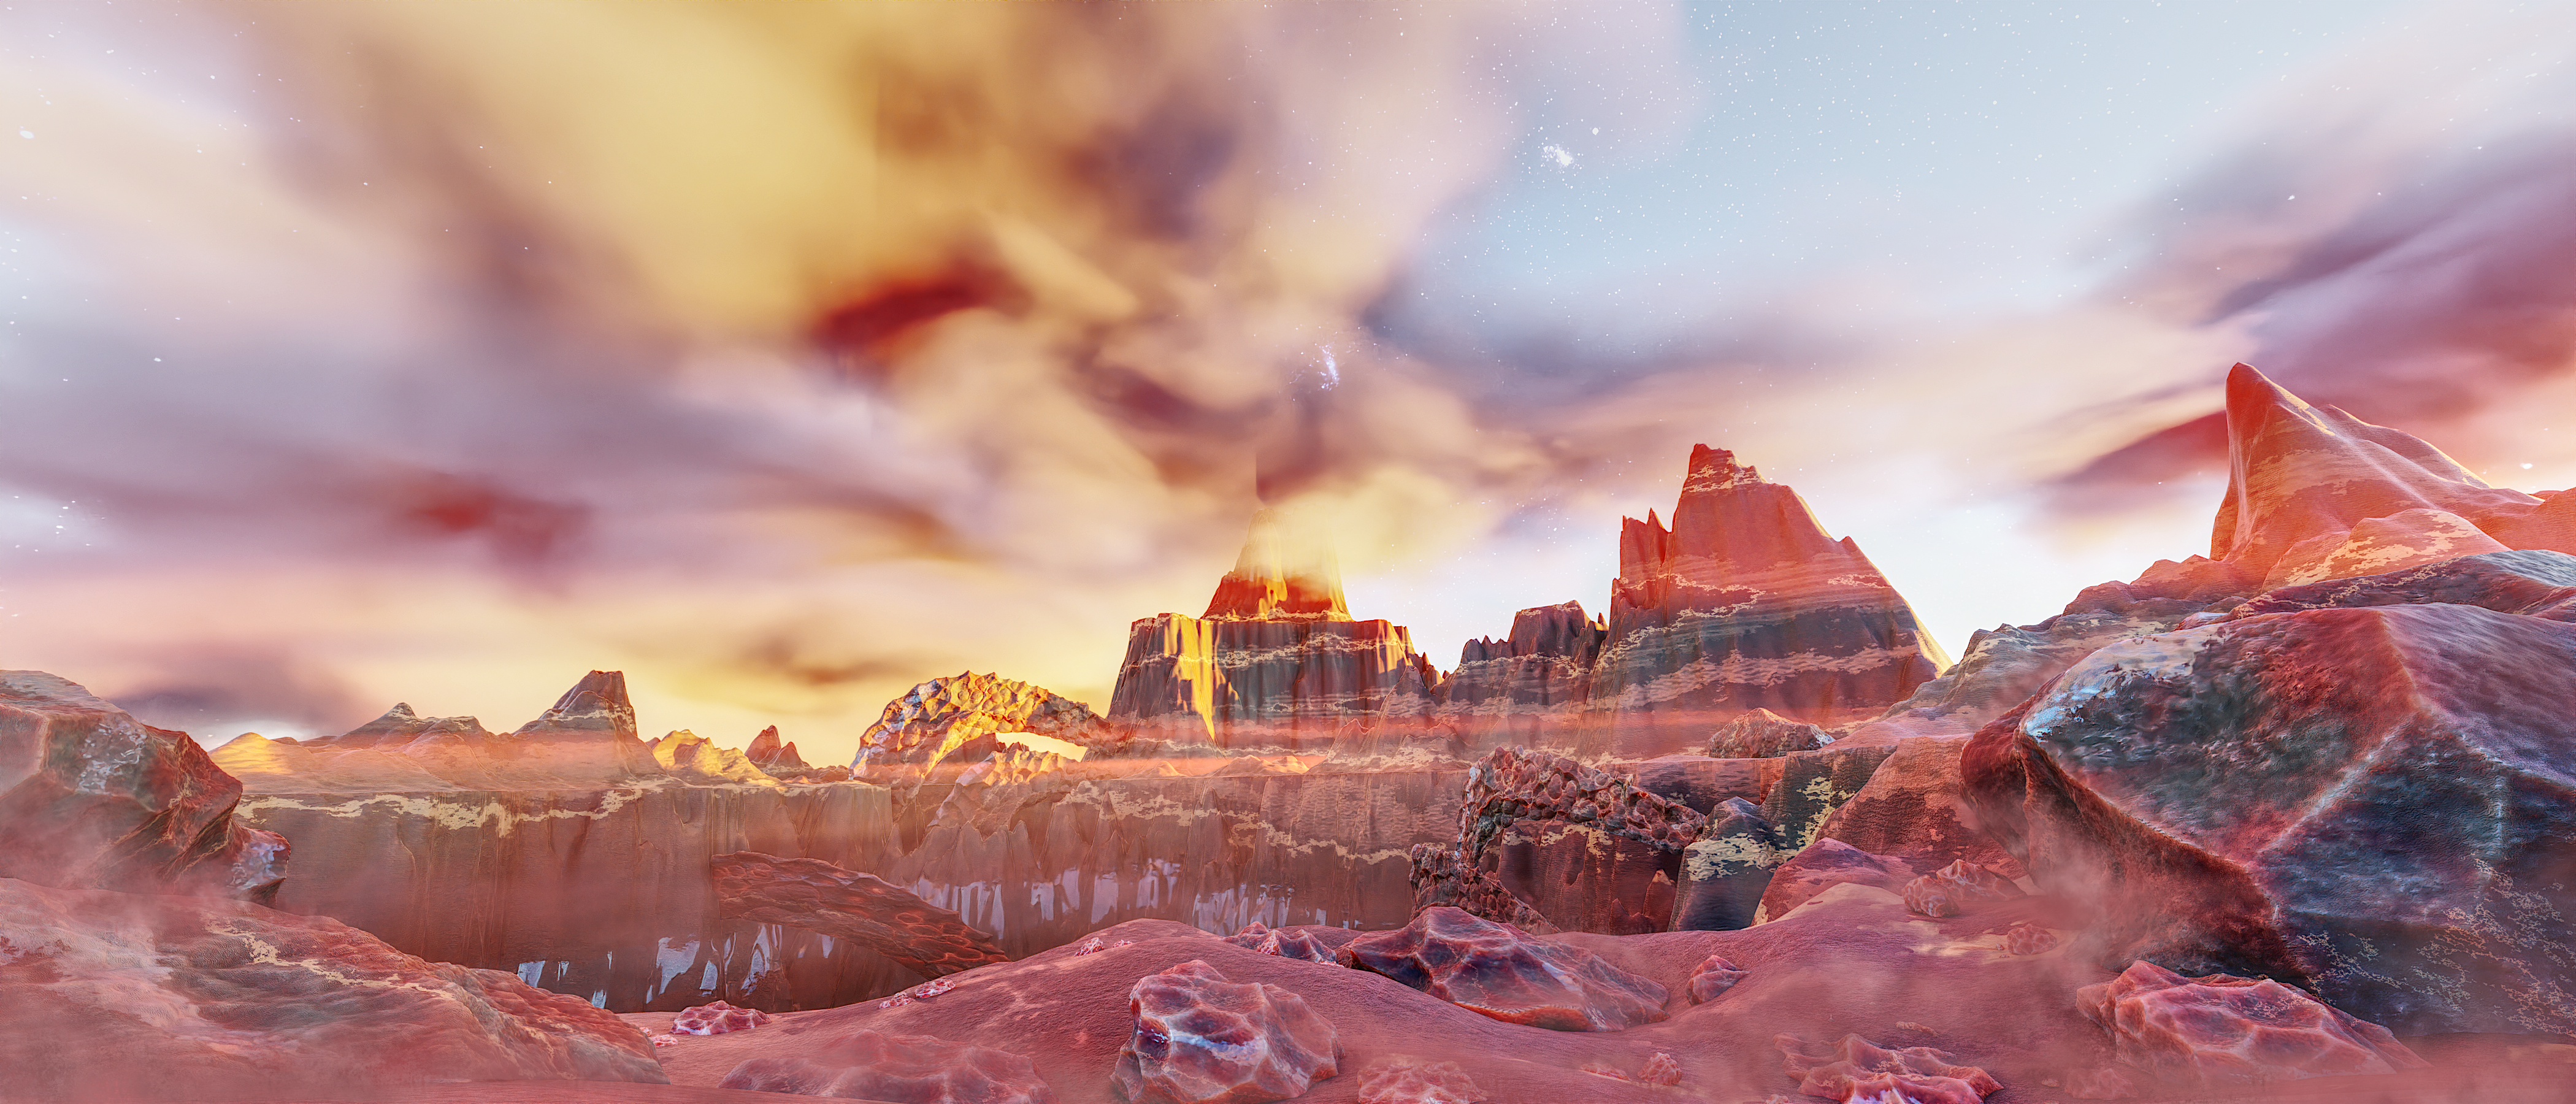 Landscape Alien World Desert Dust Blender CGi Affinity Sky Clouds Digital Art 4200x1800